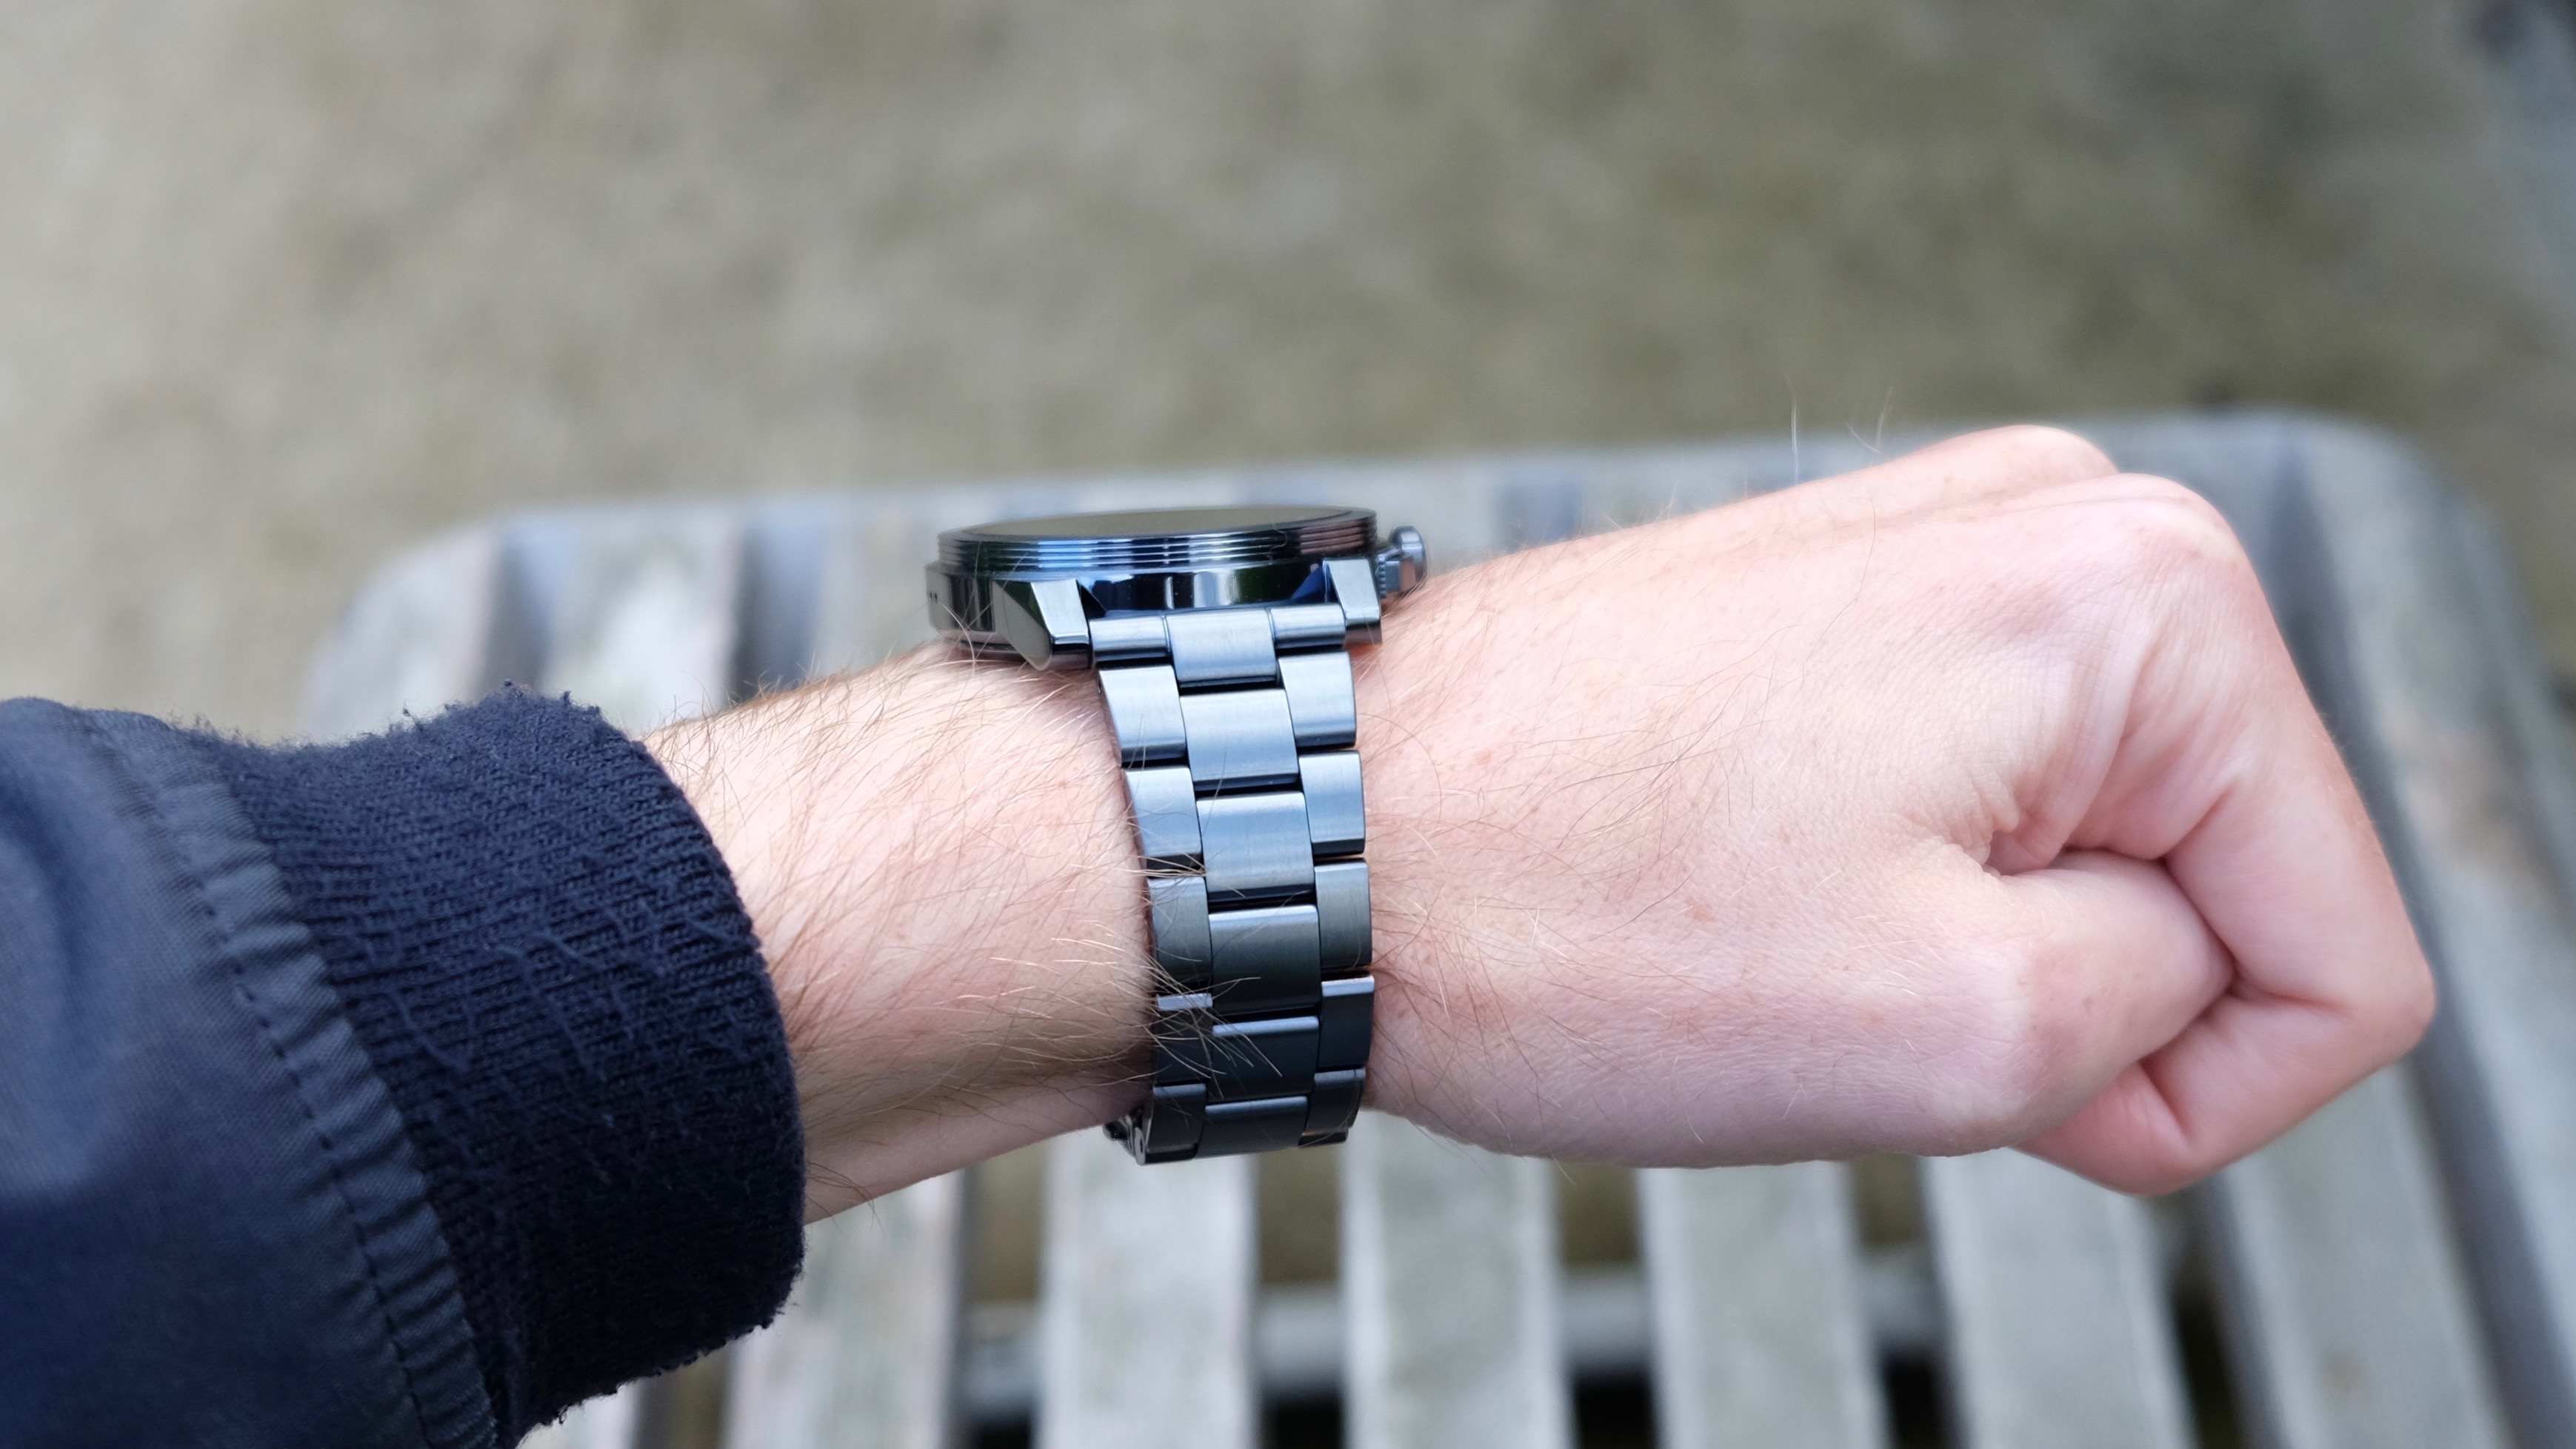 michael kors men's ion plated grayson smartwatch